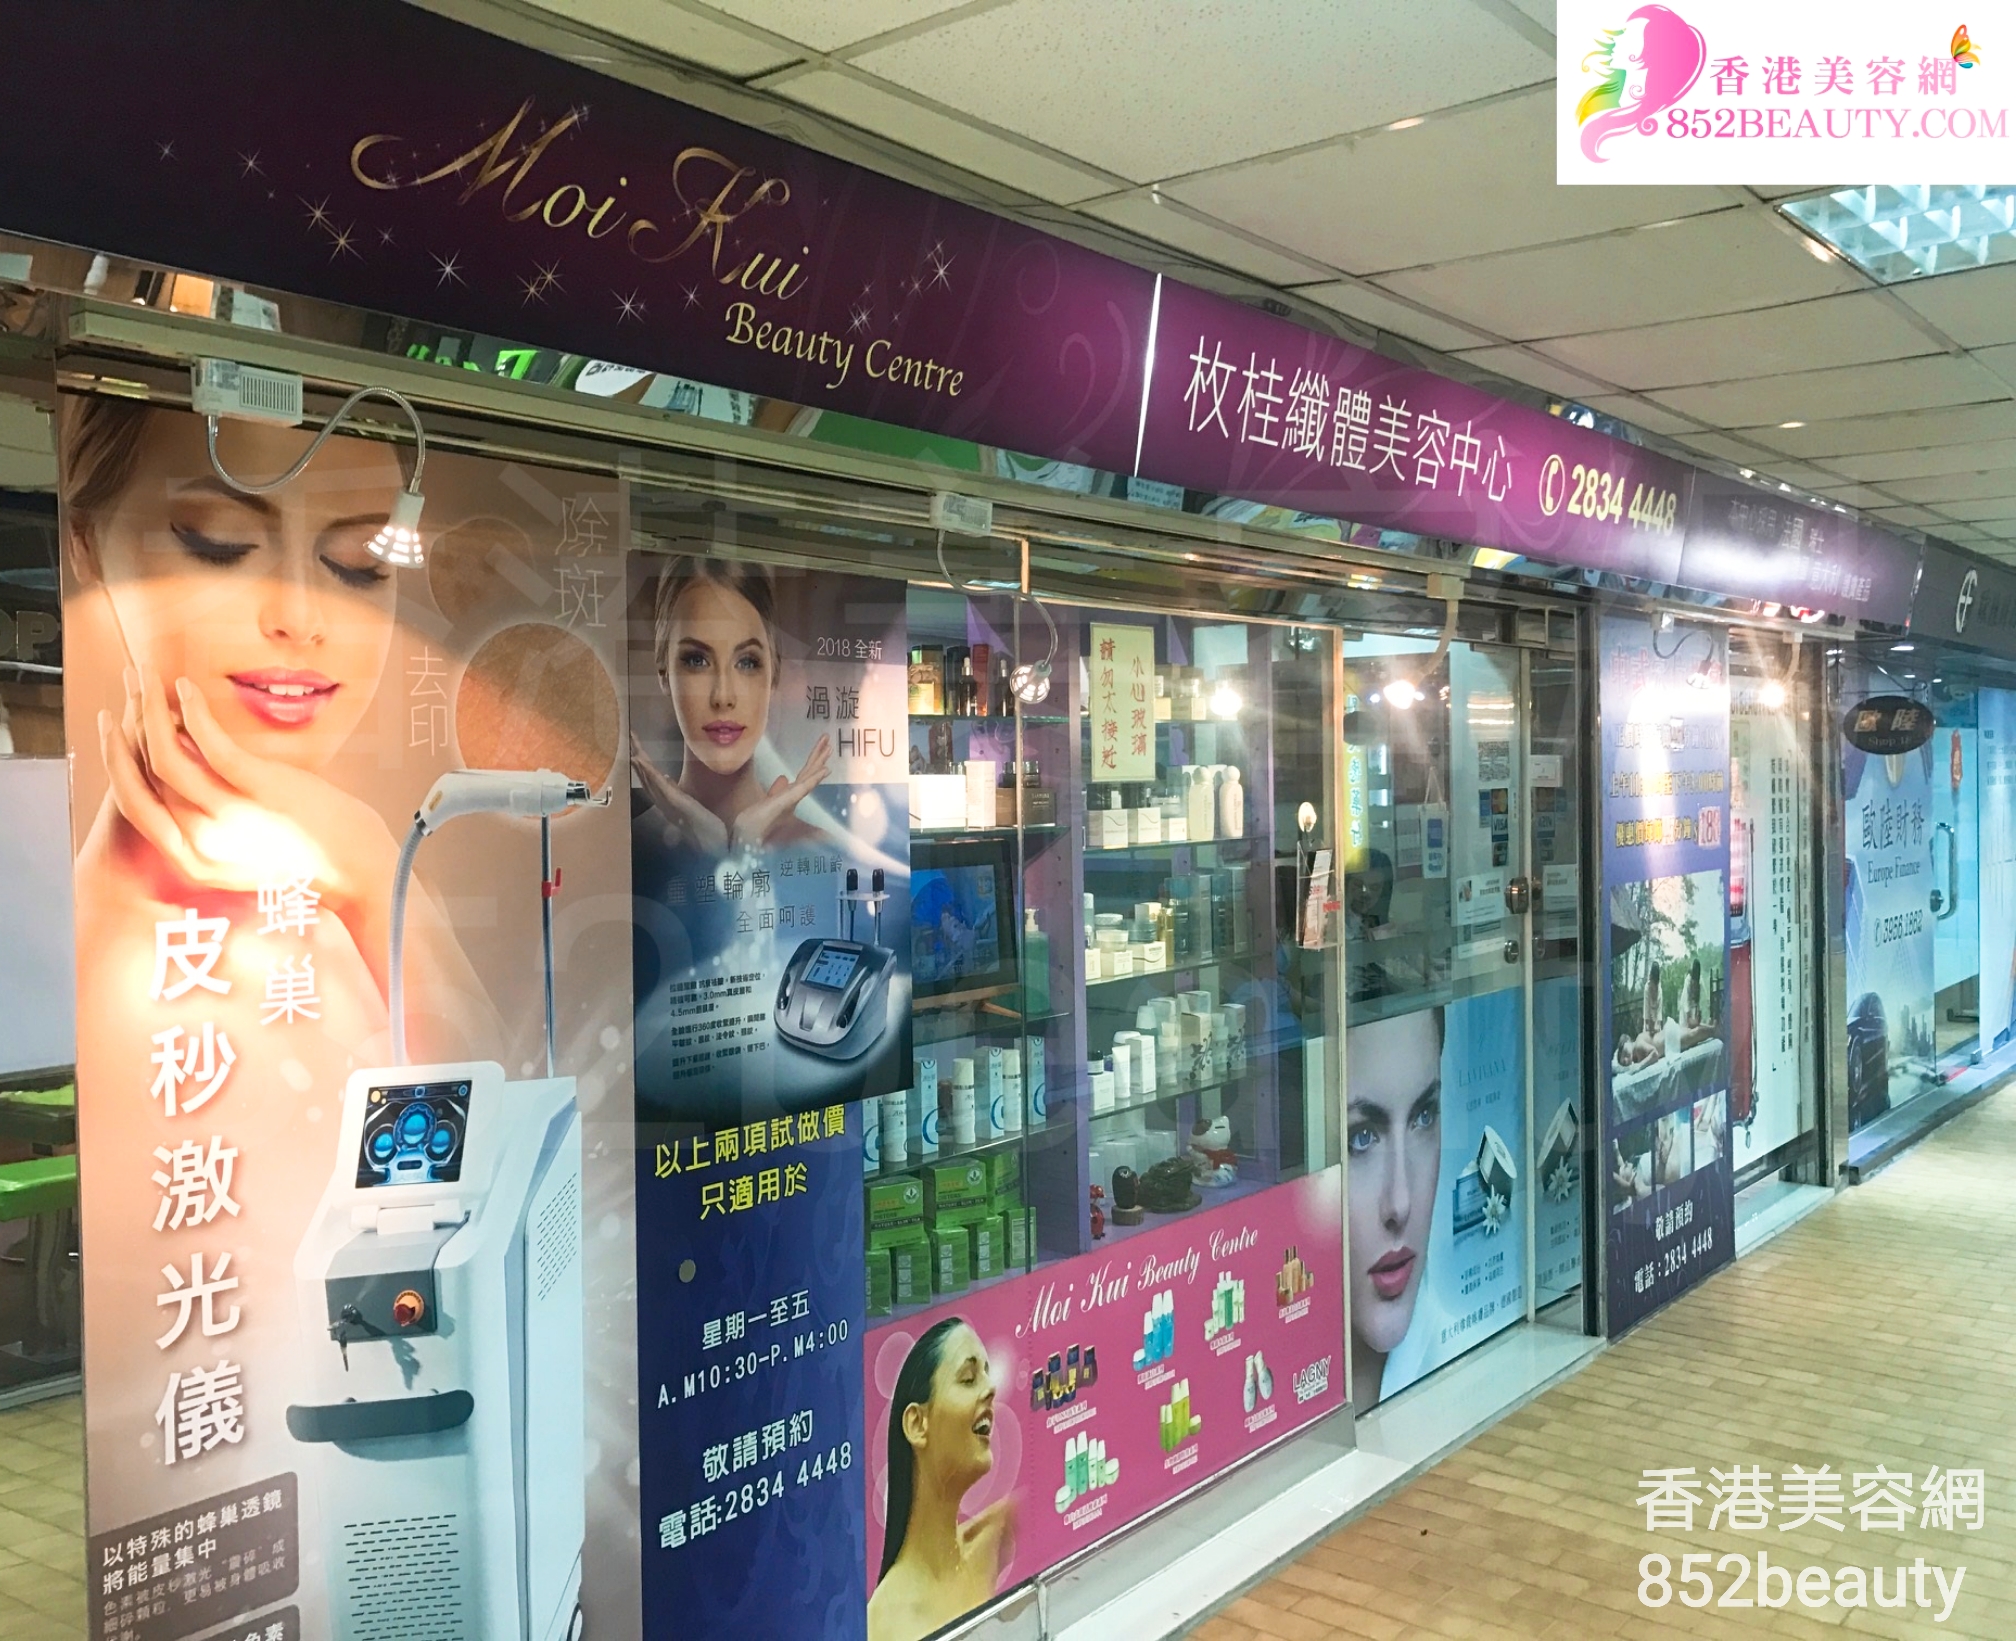 Optical Aesthetics: 枚桂纖體美容中心 Moi Kui Beauty Centre